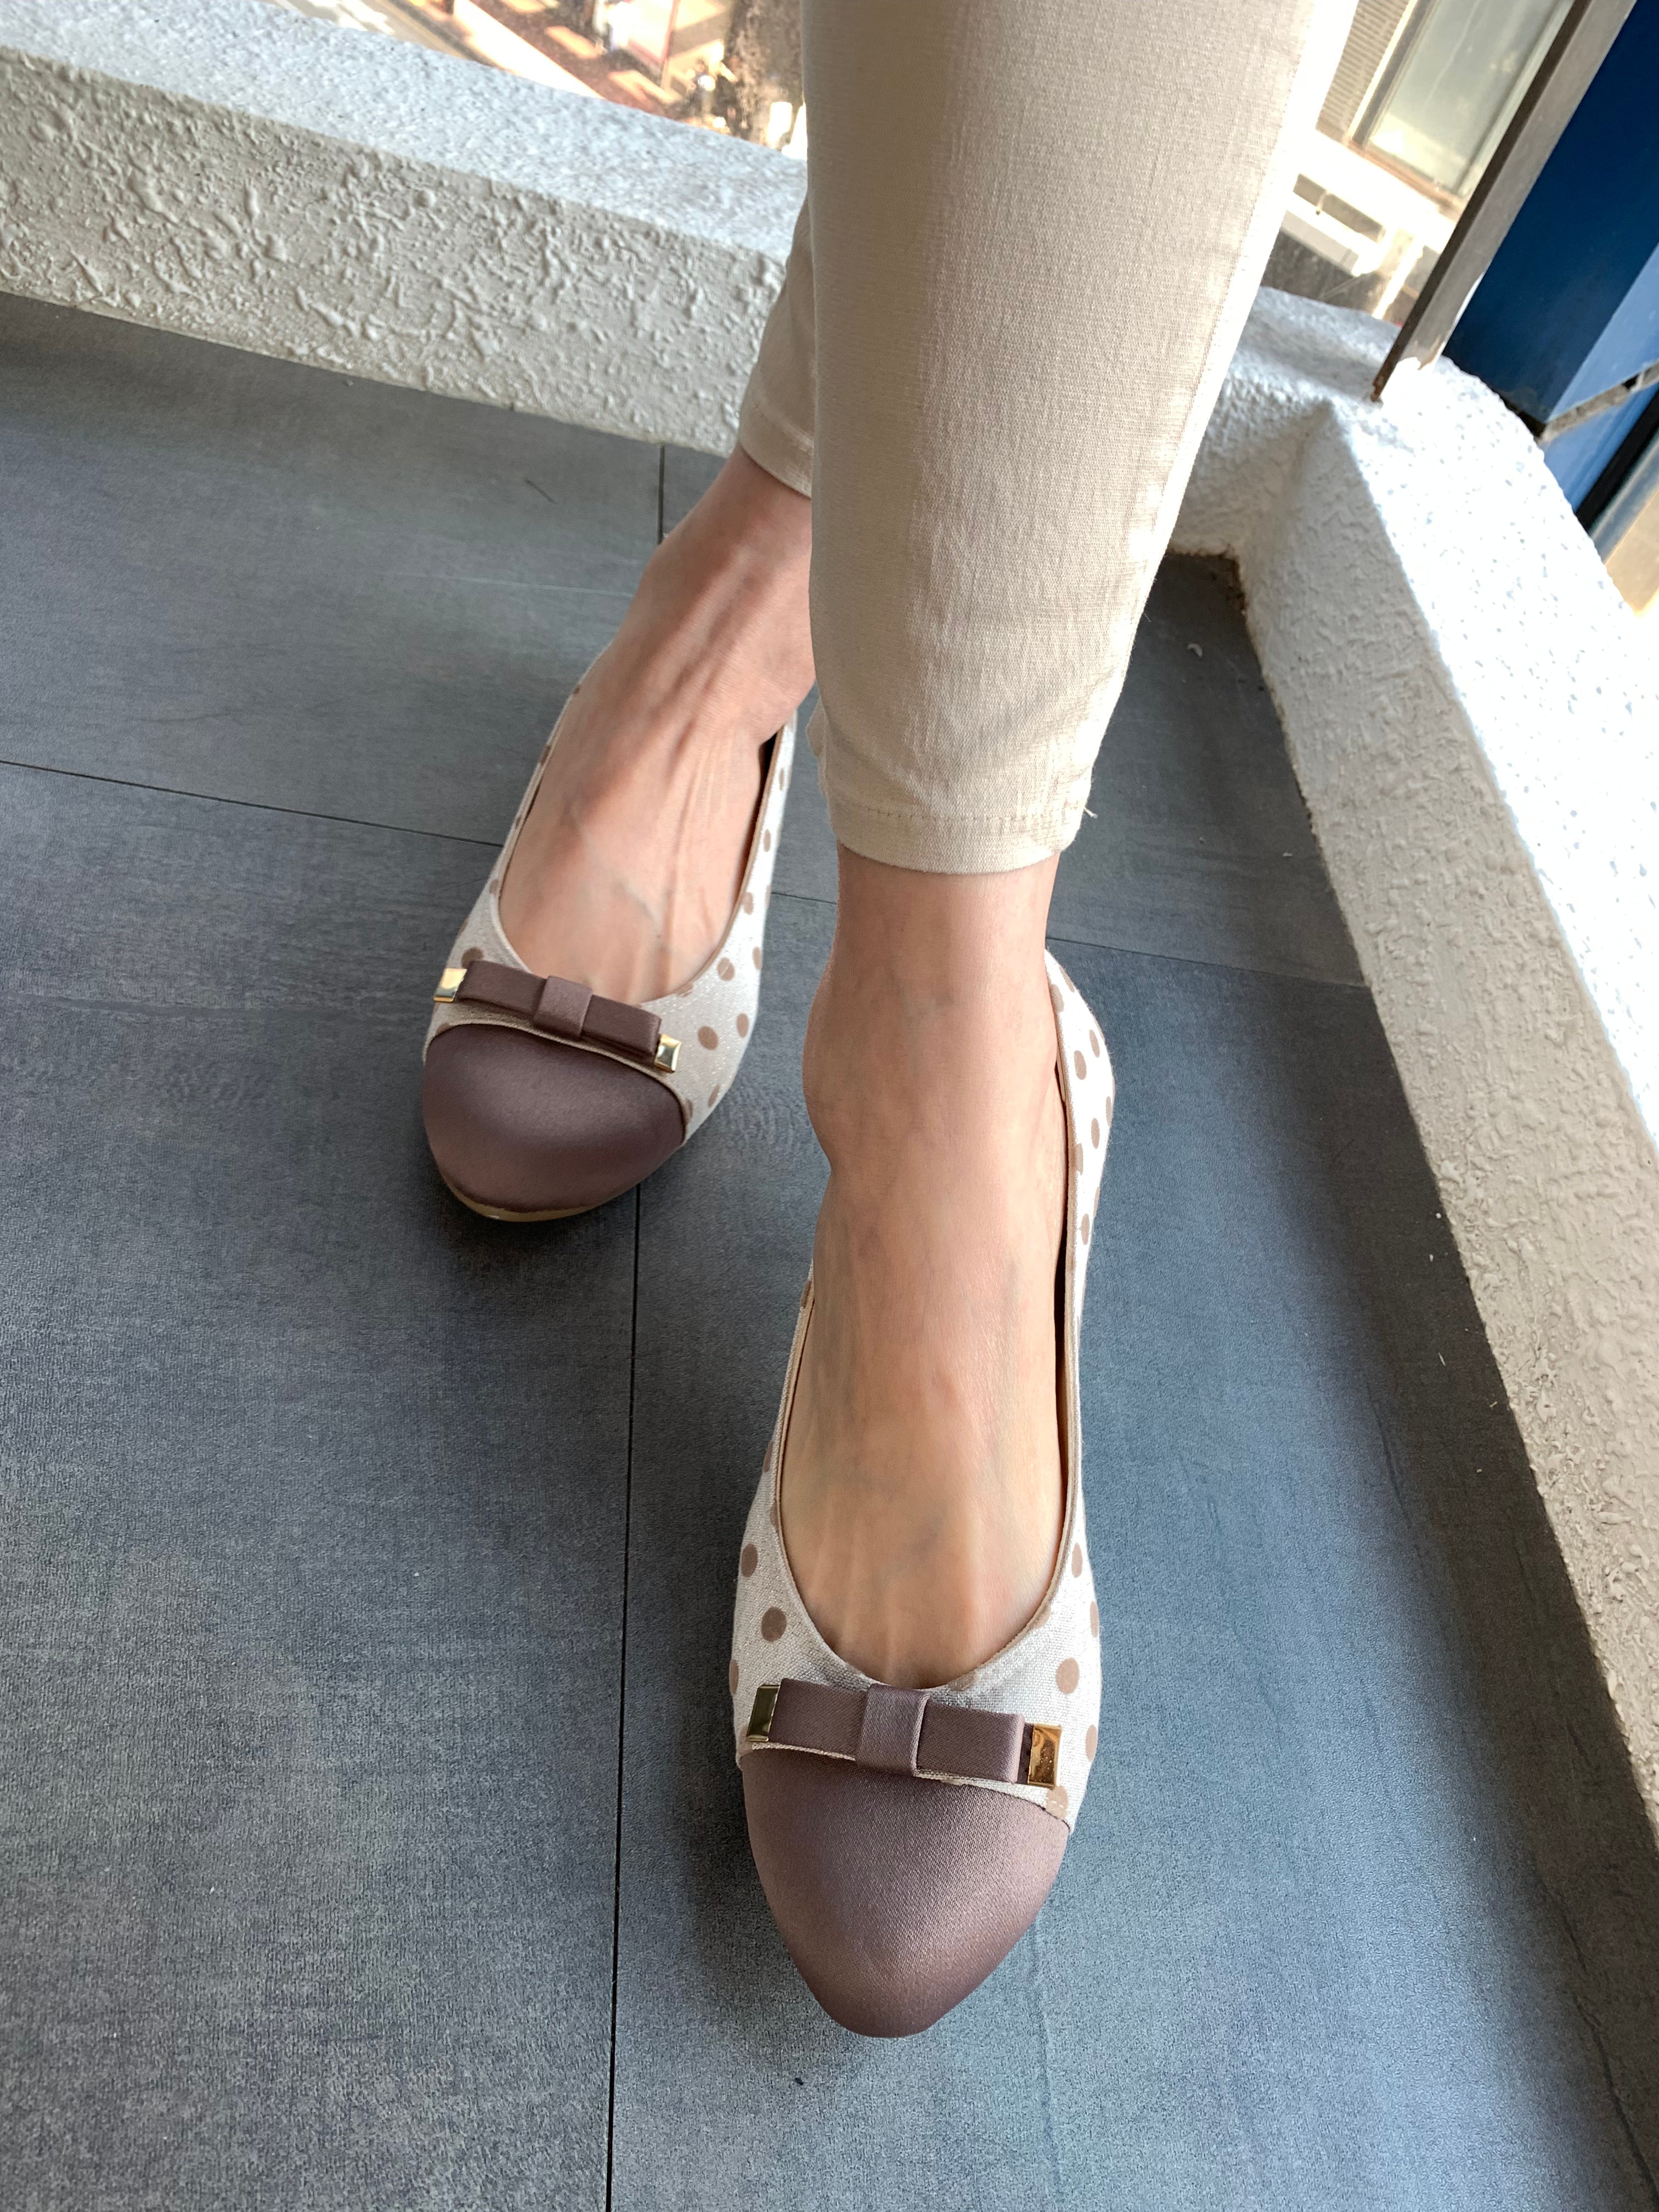 Japan Fashion Dots Pattern Flats with Bow (Soft Soles)-ARCH CONTACT-BE-JP/TW Size-1: 230-偉豐鞋 WELL SHOE HK-Well Shoe-偉豐鞋-偉豐網-荃灣鞋店-Functional shoes-Hong Kong Tsuen Wan Shoe Store-Tai Wan Shoe-Japan Shoe-高品質功能鞋-台灣進口鞋-日本進口鞋-High-quality shoes-鞋類配件-荃灣進口鞋-香港鞋店-優質鞋類產品-水靴-帆布鞋-廚師鞋-香港鞋品牌-Hong Kong Shoes brand-長者鞋-Hong Kong Rain Boots-Kitchen shoes-Cruthes-Slipper-Well Shoe Hong Kong-Anello-Arriba-休閒鞋-舒適鞋-健康鞋-皮鞋-Healthy shoes-Leather shoes-Hiking shoes